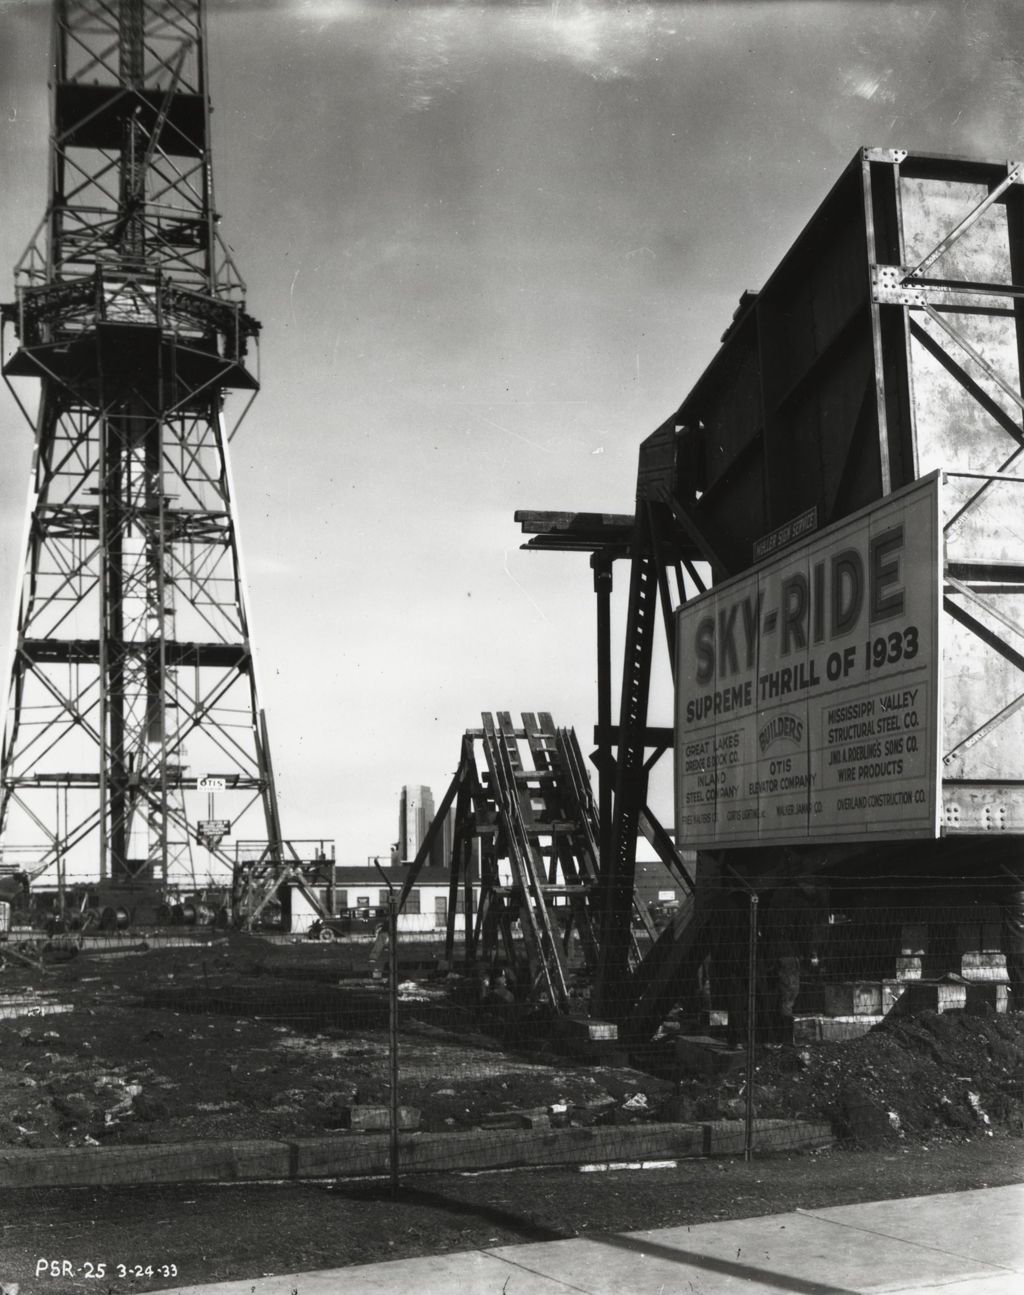 Miniature of Century of Progress Skyride towers in 1933